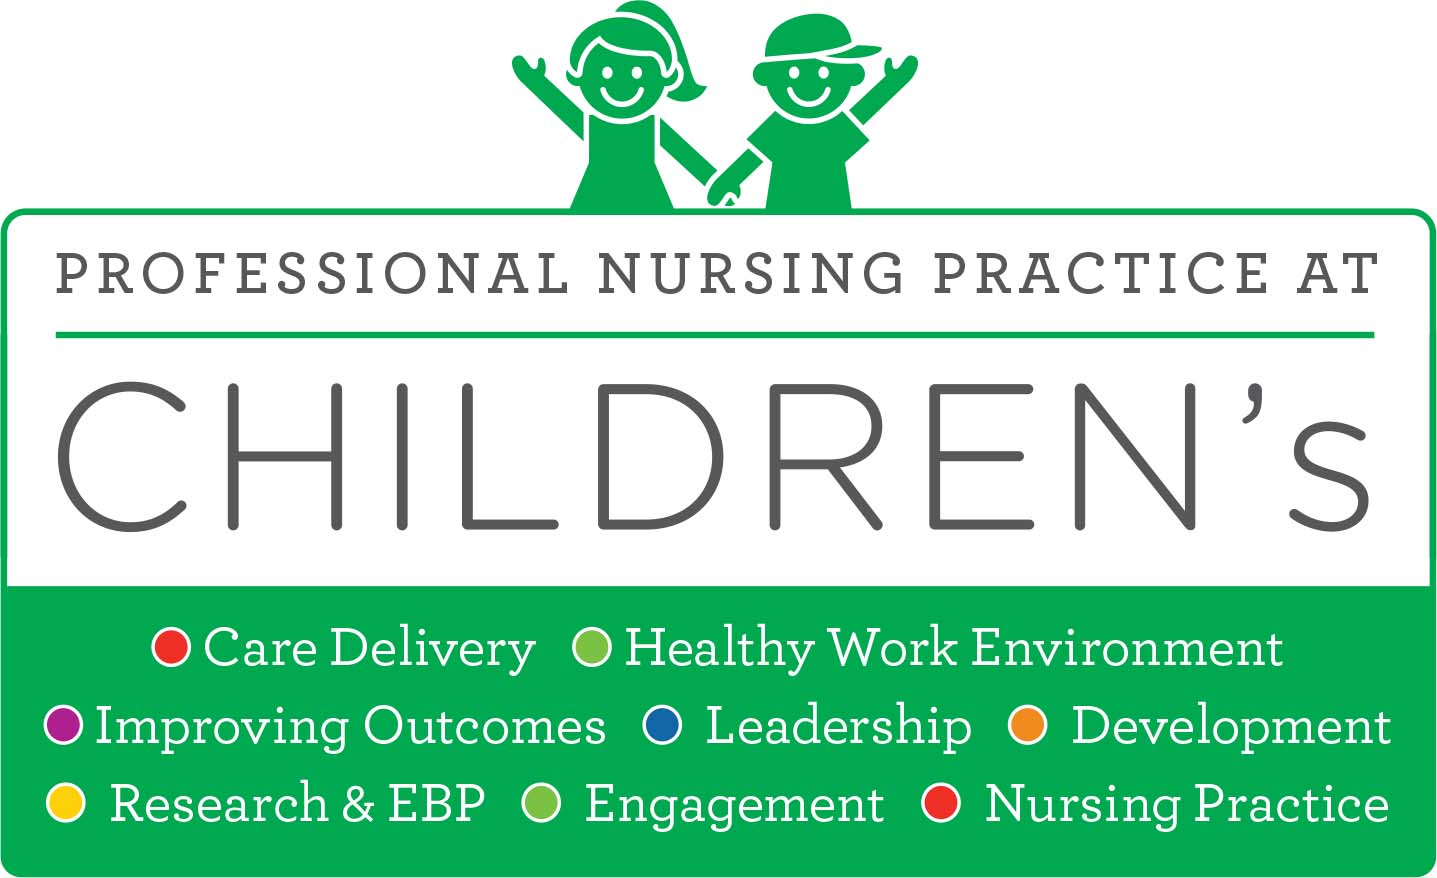 professional nursing practice model at Children's